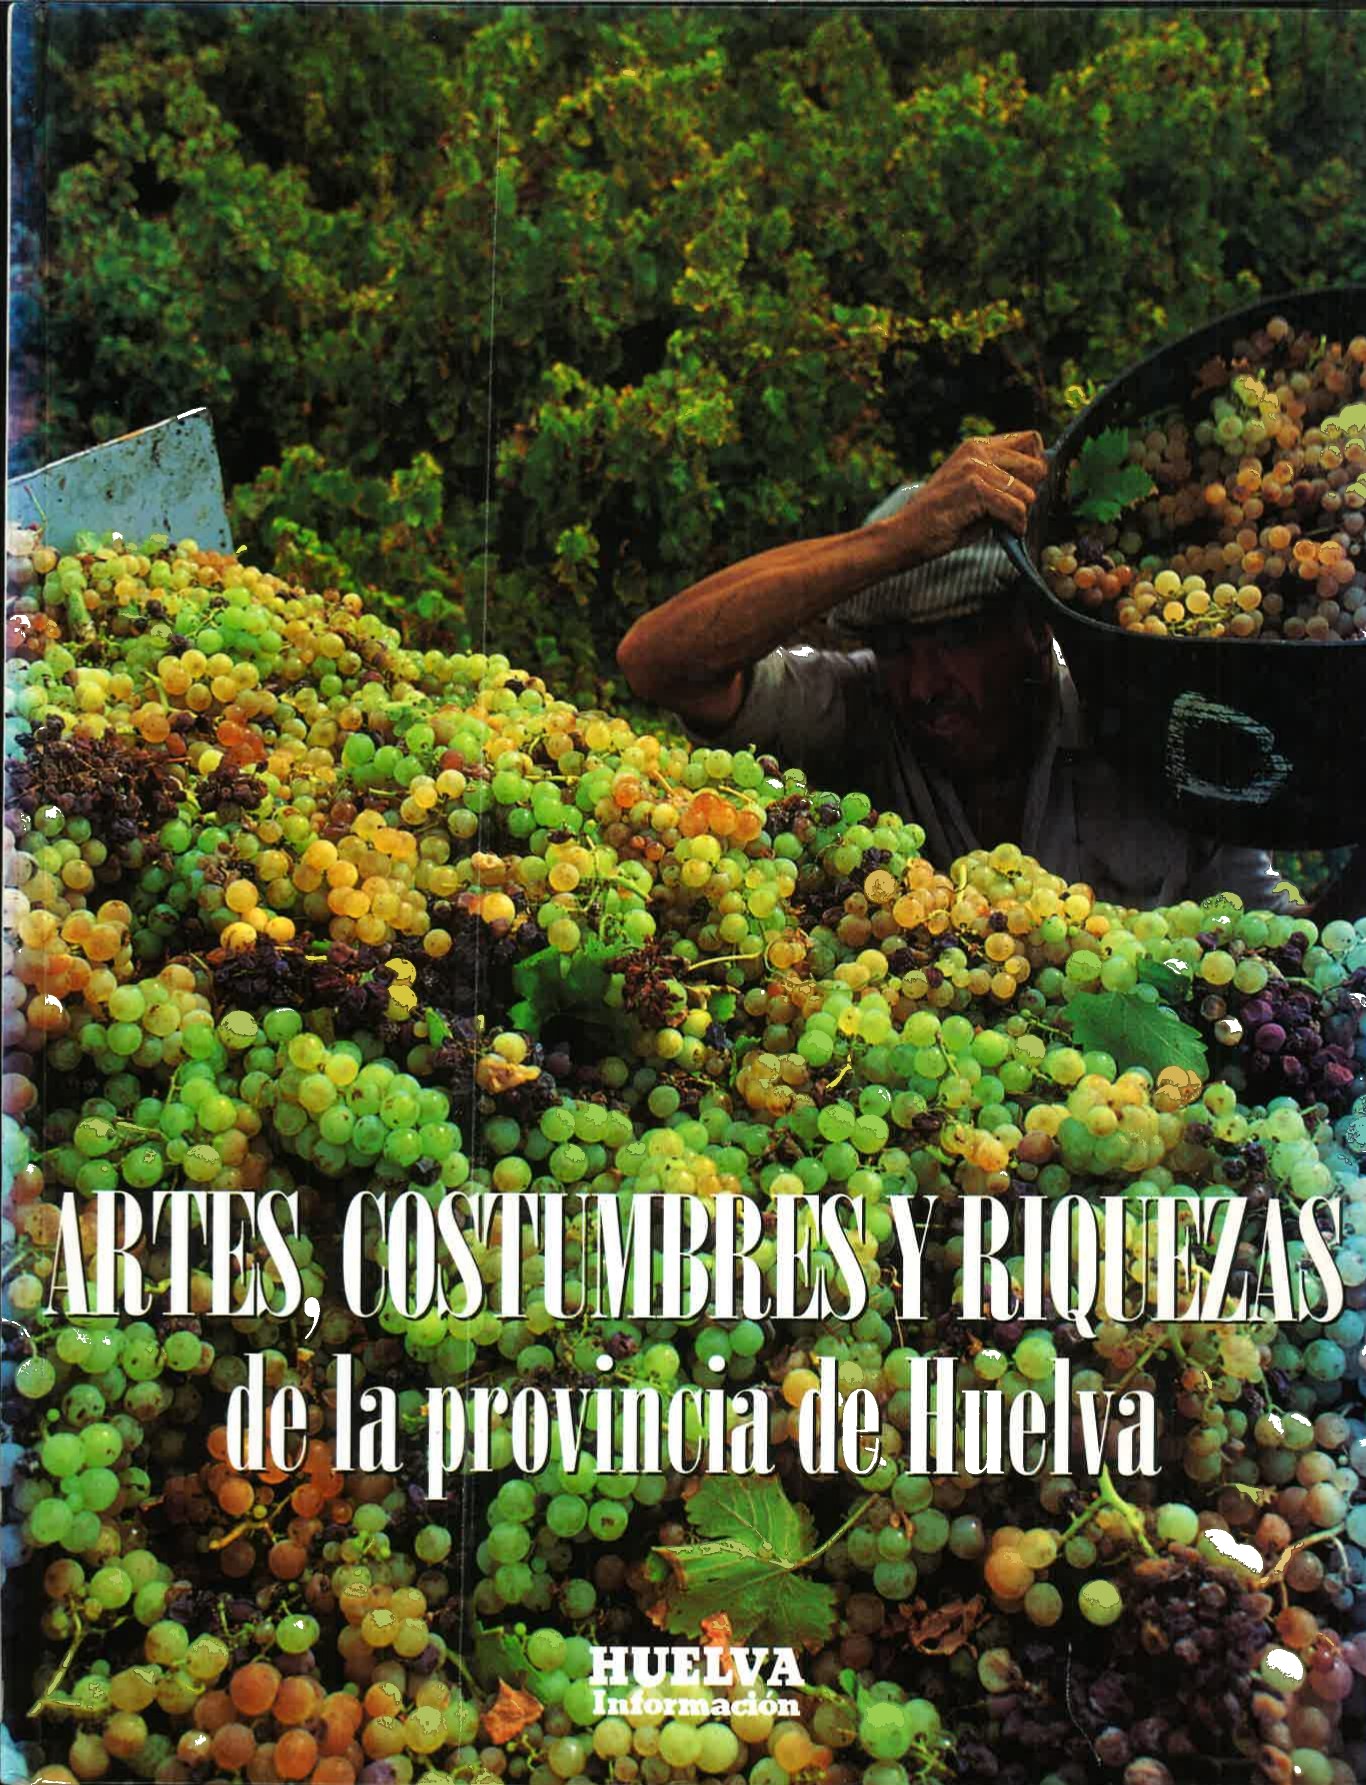 Imagen de portada del libro Artes, costumbres y riquezas de la provincia de Huelva